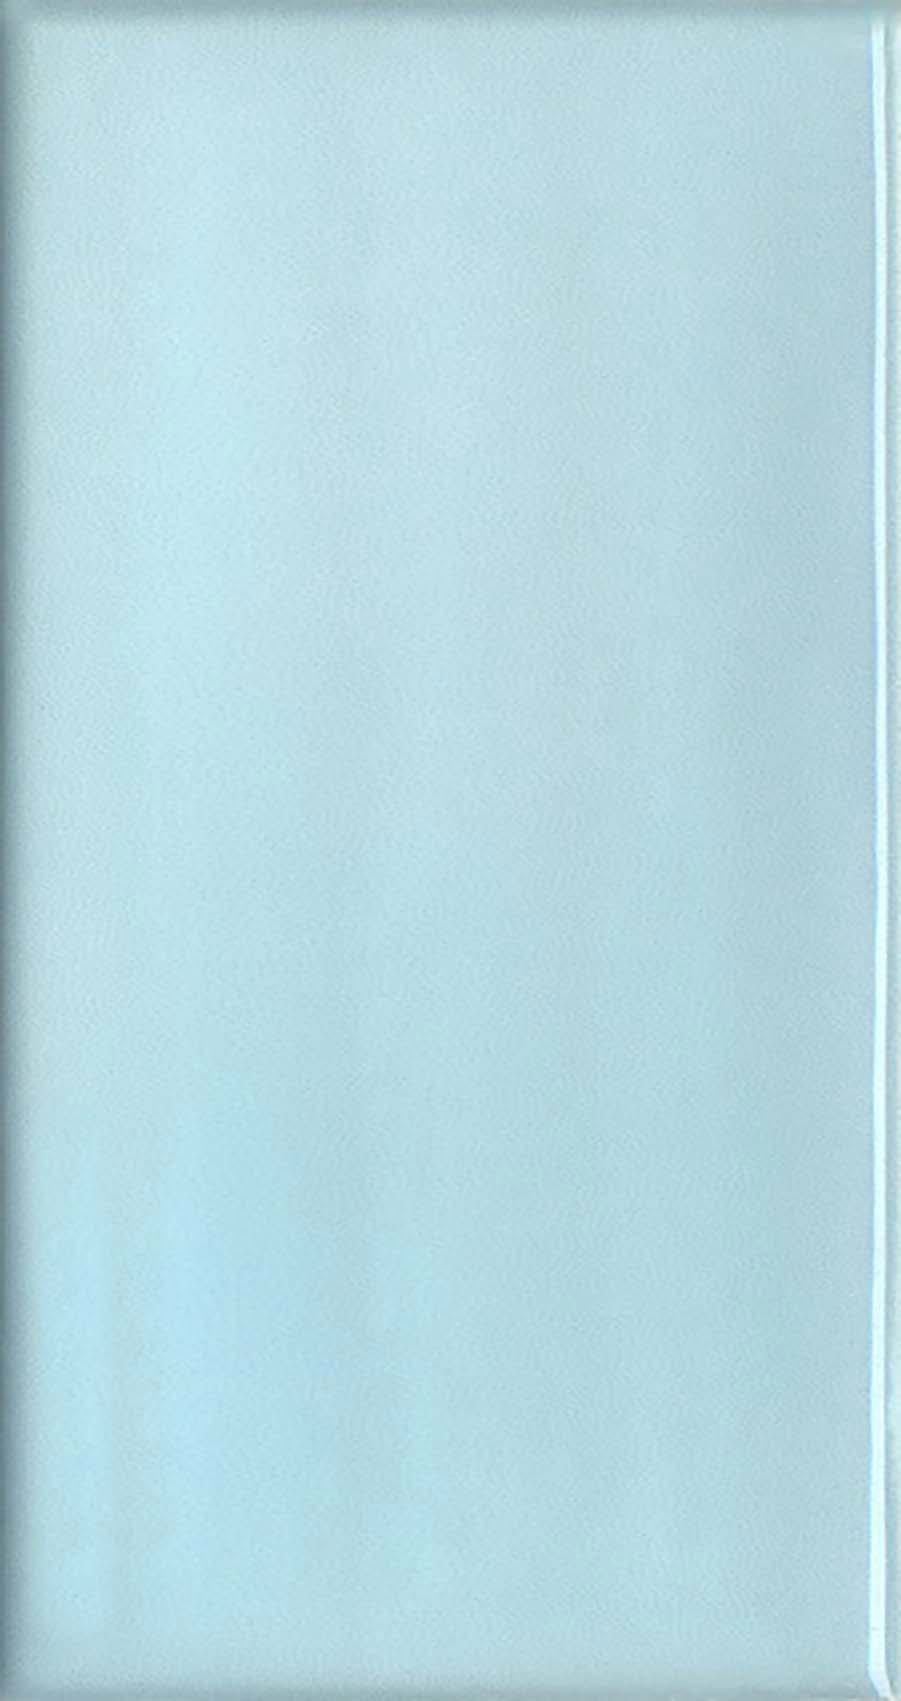 90291383 Керамическая плитка Мурано Голубой 7.4х15см, цена за упаковку STLM-0171238 KERAMA MARAZZI